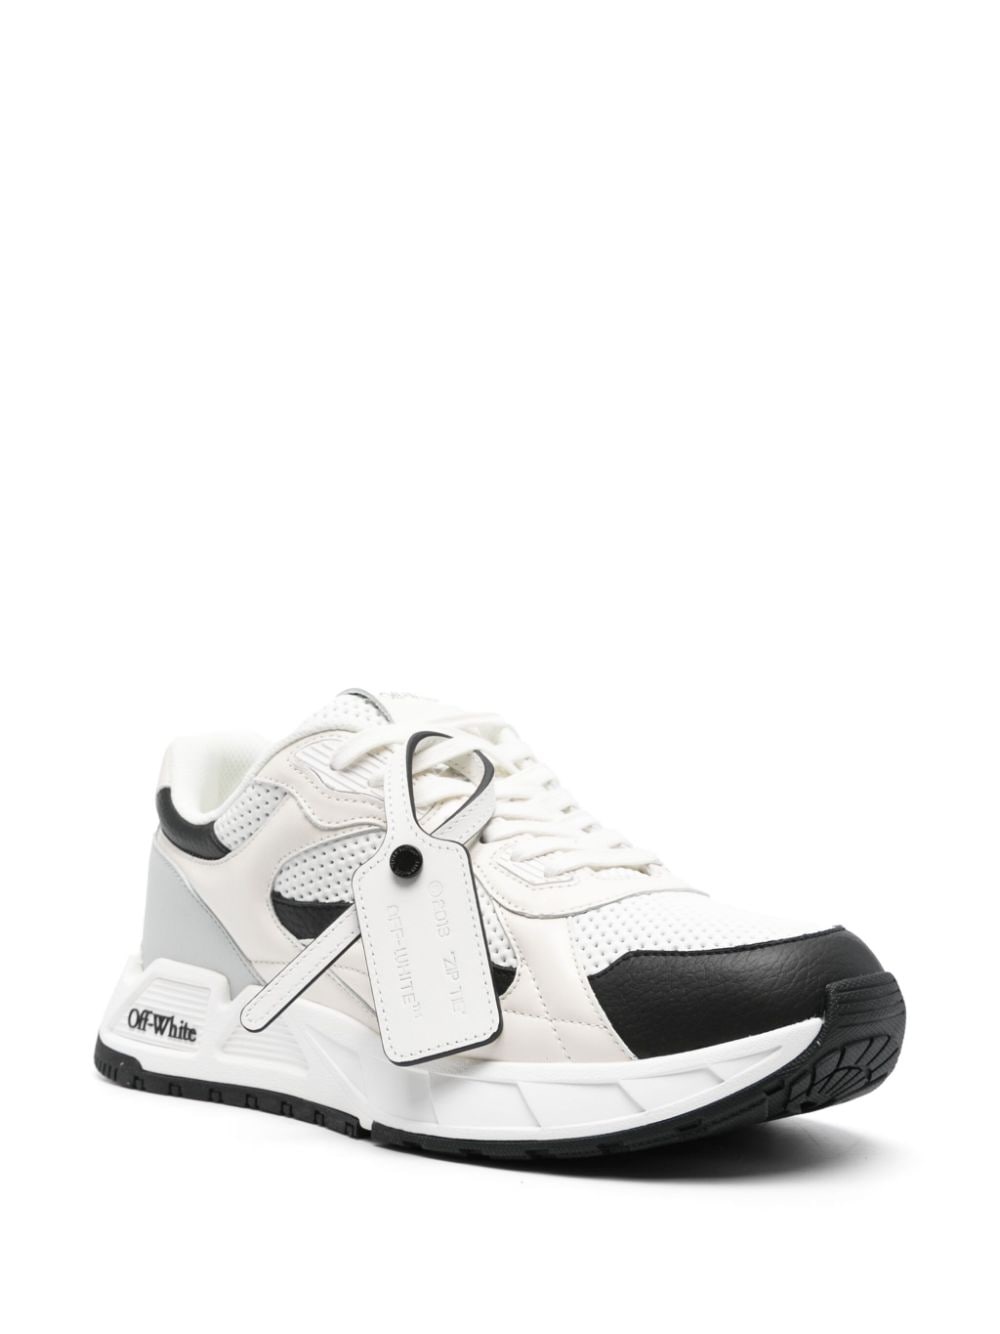 Off-White c/o Virgil Abloh 5.0 Off-court Sneakers in Black for Men